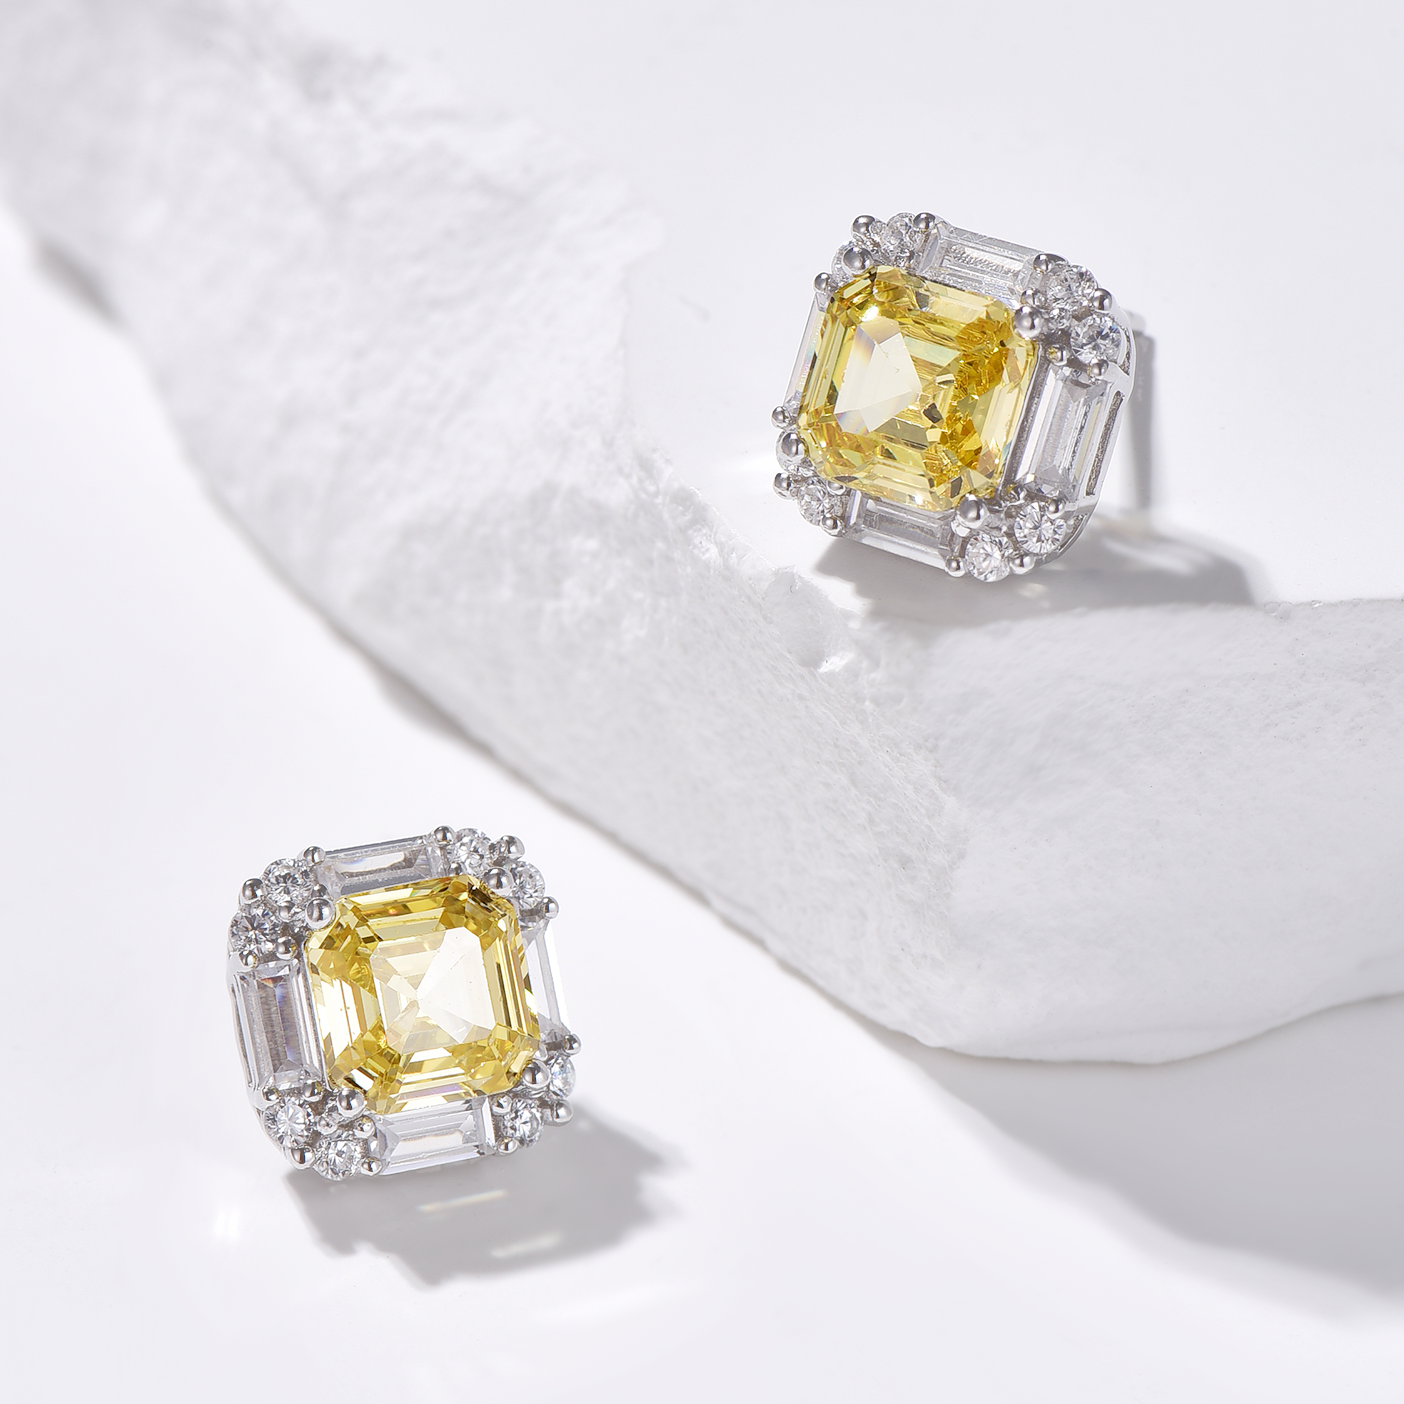 Halo Asscher Cut High Carbon Diamond Stud Earrings - Rhodium Plated Sterling Silver - Yellow - Earrings - ONNNIII